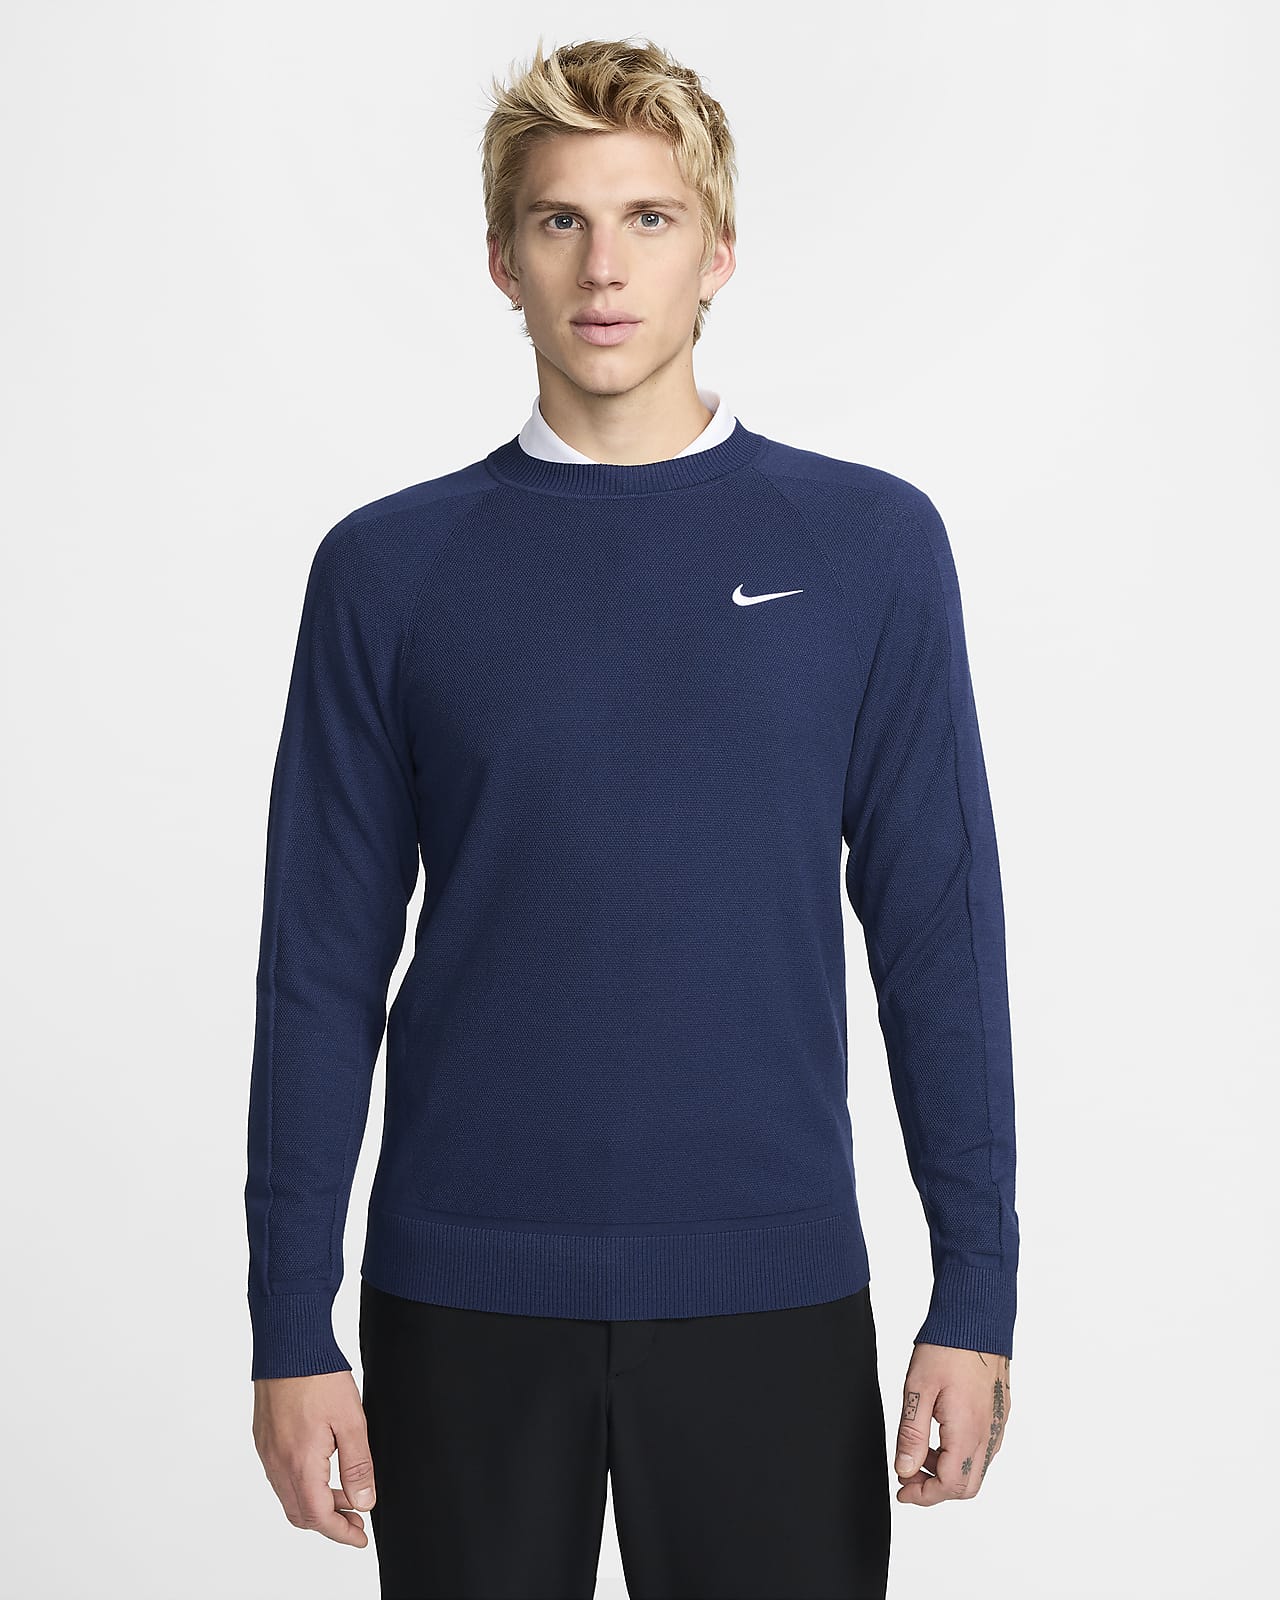 Nike Tour Men's Golf Sweater